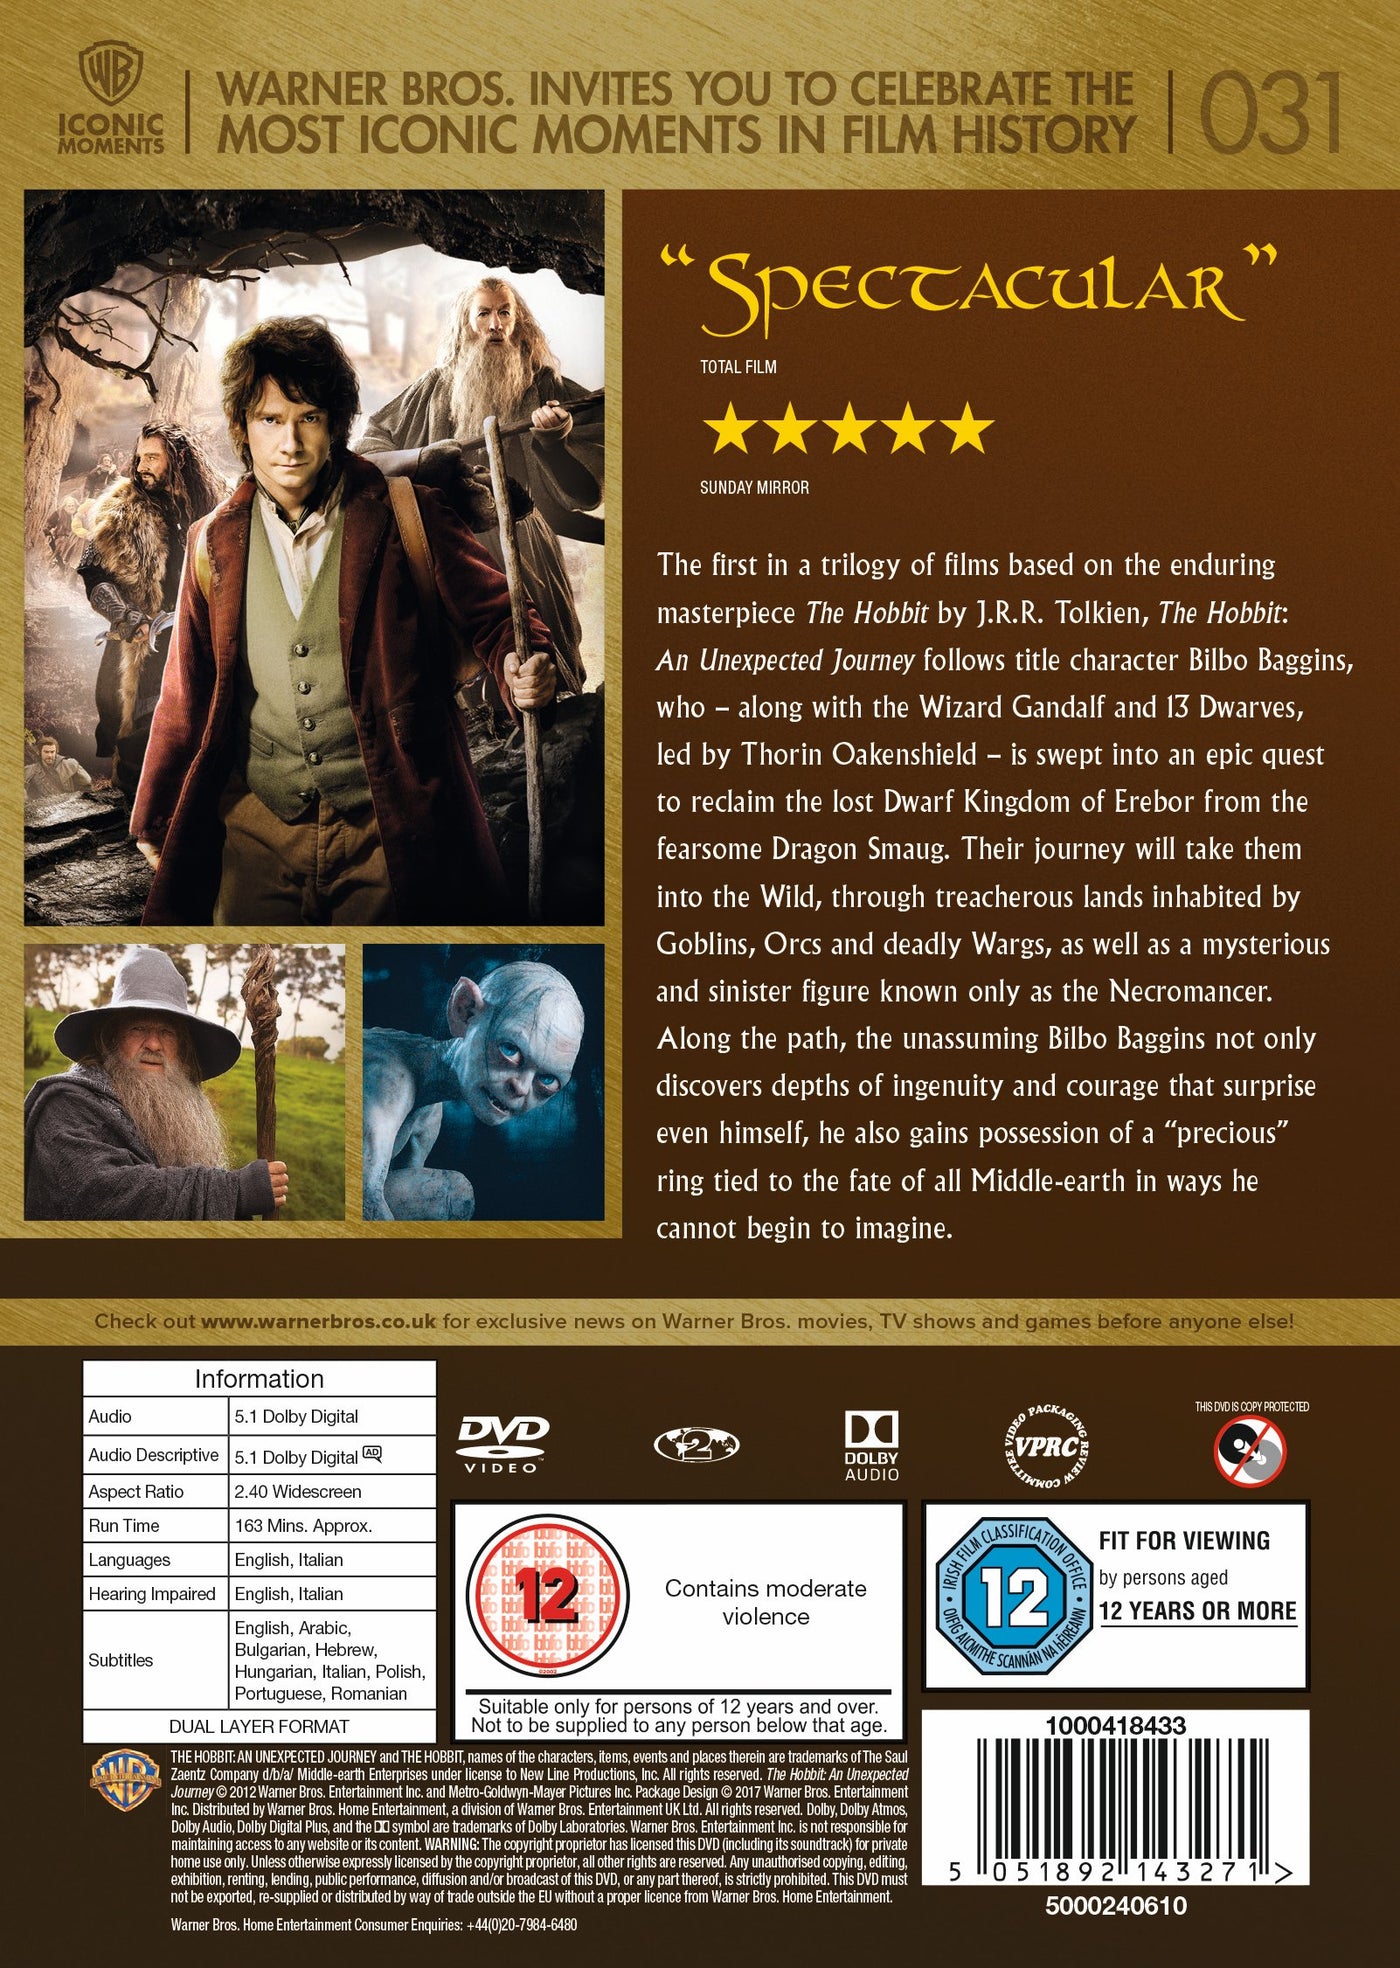 Buy The Hobbit: An Unexpected Journey + Bonus - Microsoft Store